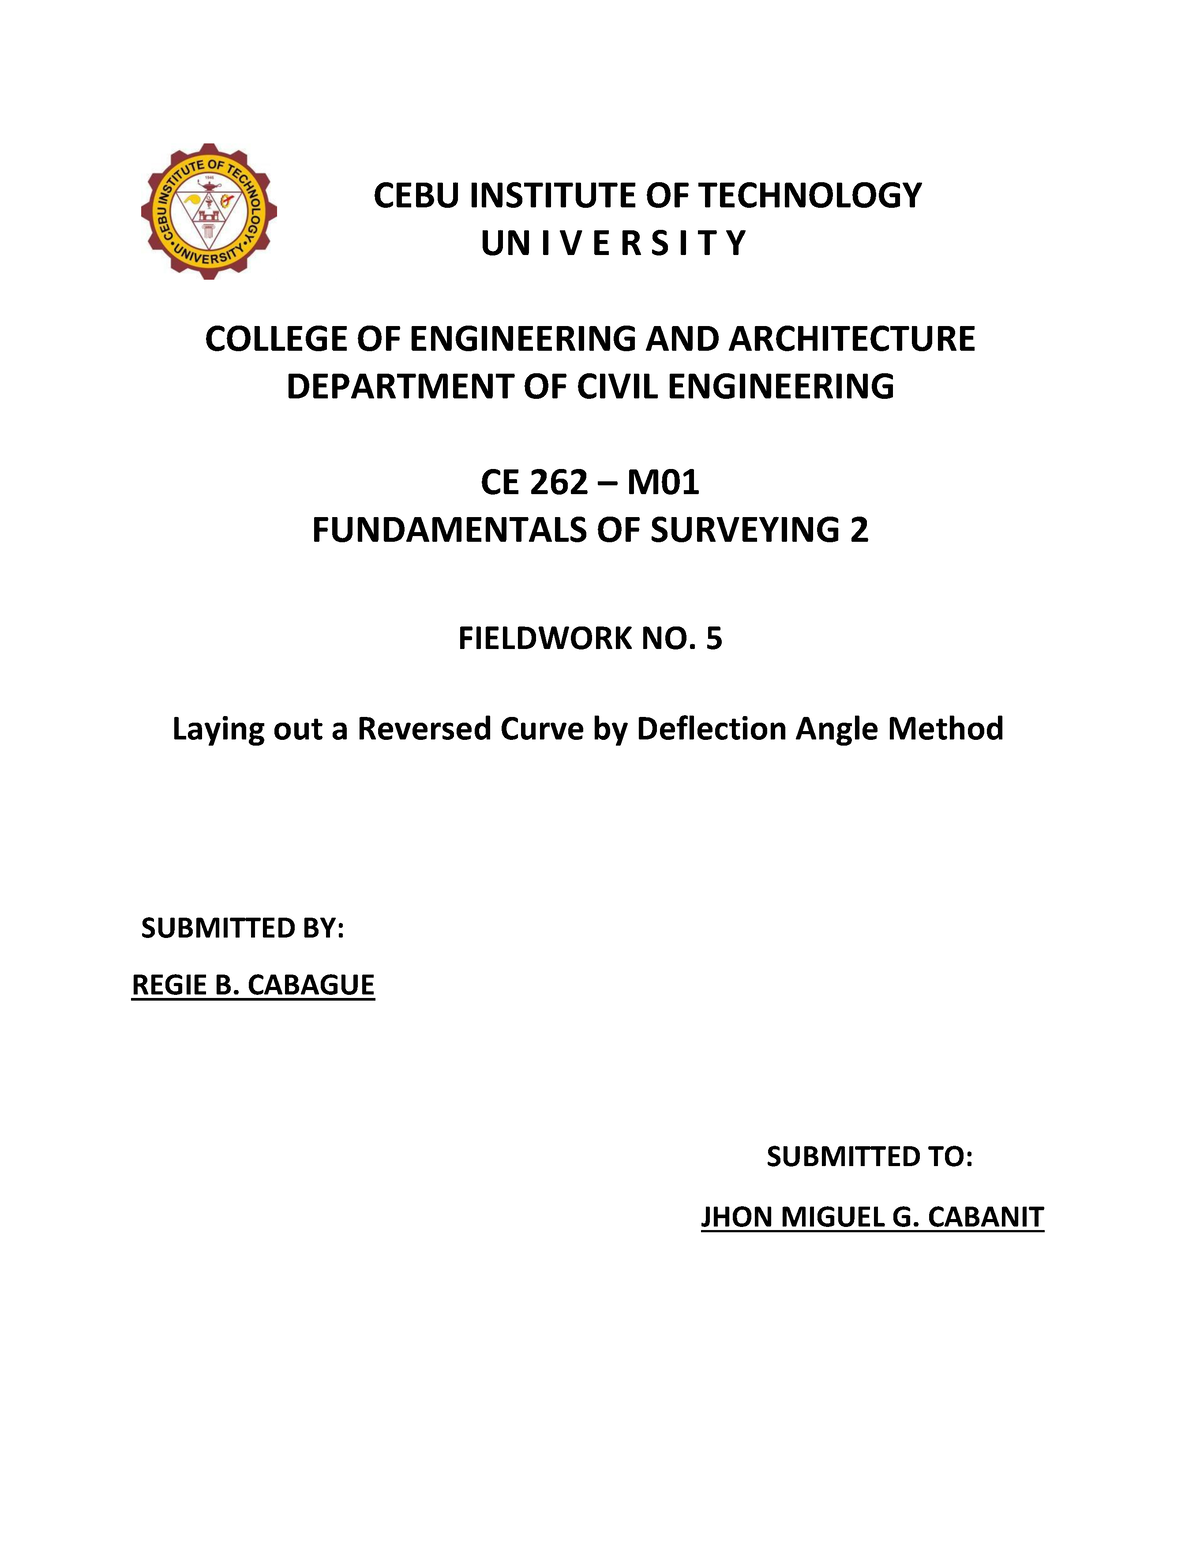 CE262 Fieldwork 05 Cabague - CEBU INSTITUTE OF TECHNOLOGY UN I V E R S ...